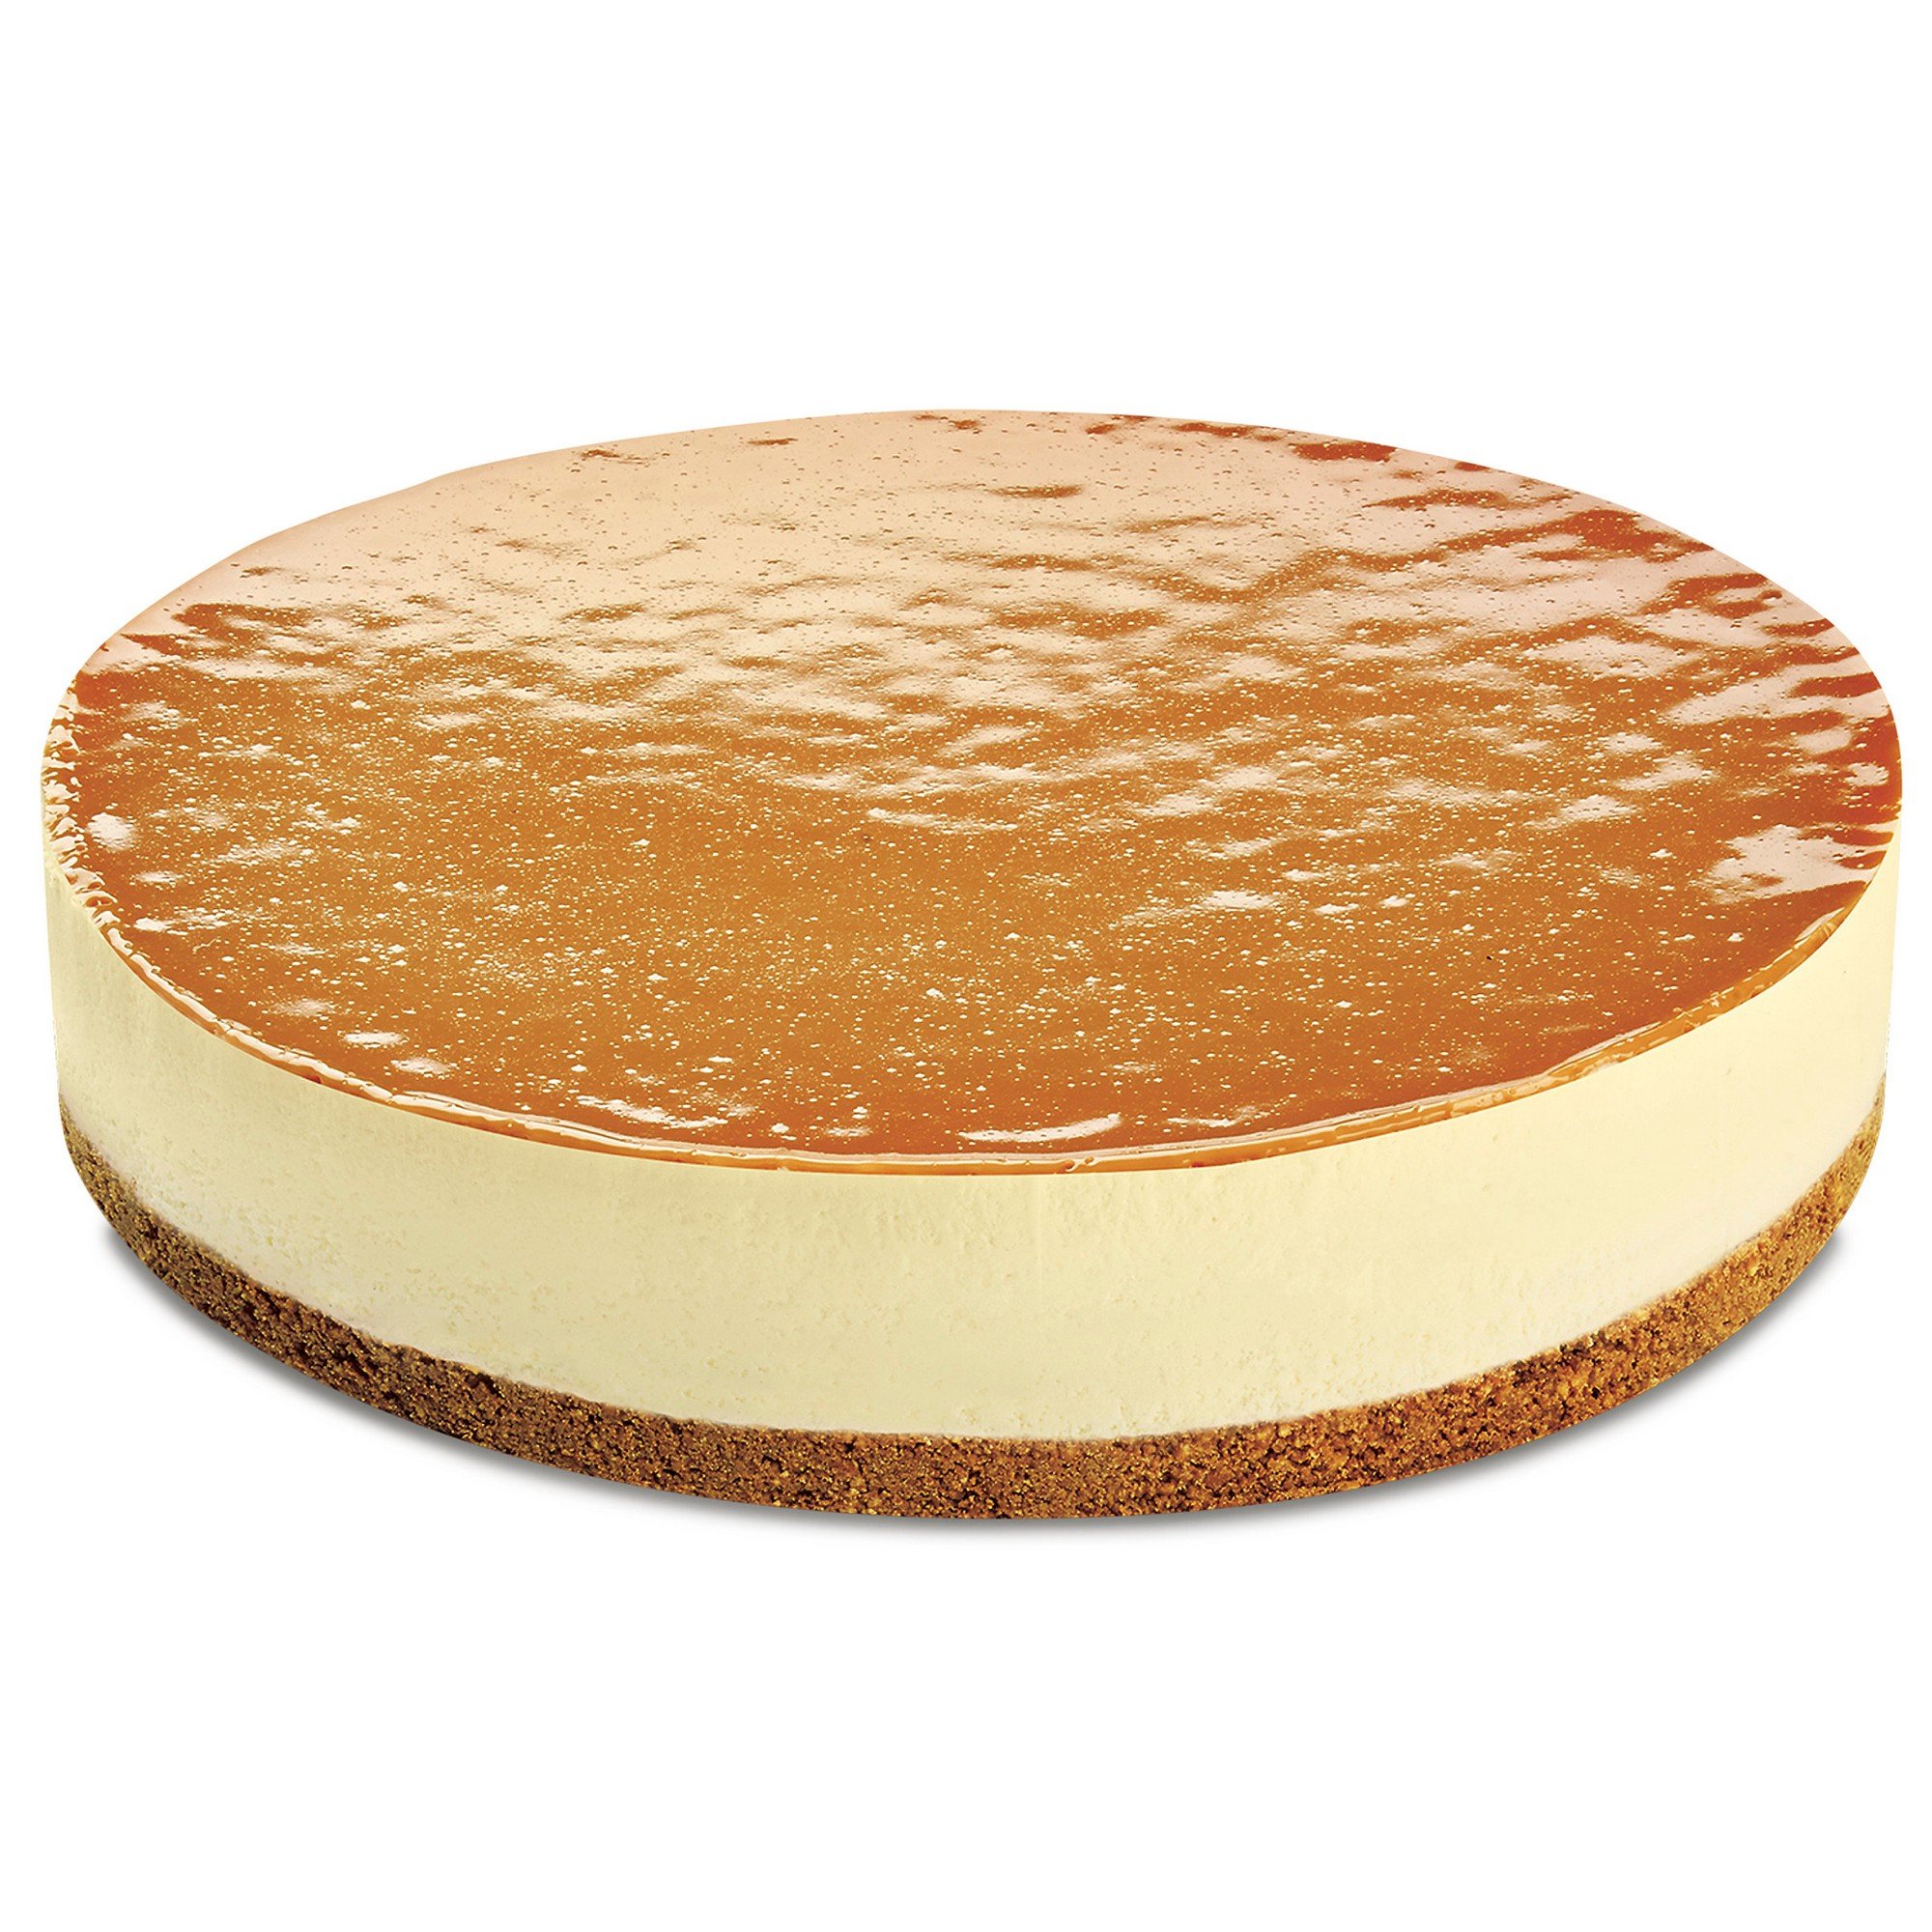 Cheesecake salted caramel   4x1400g